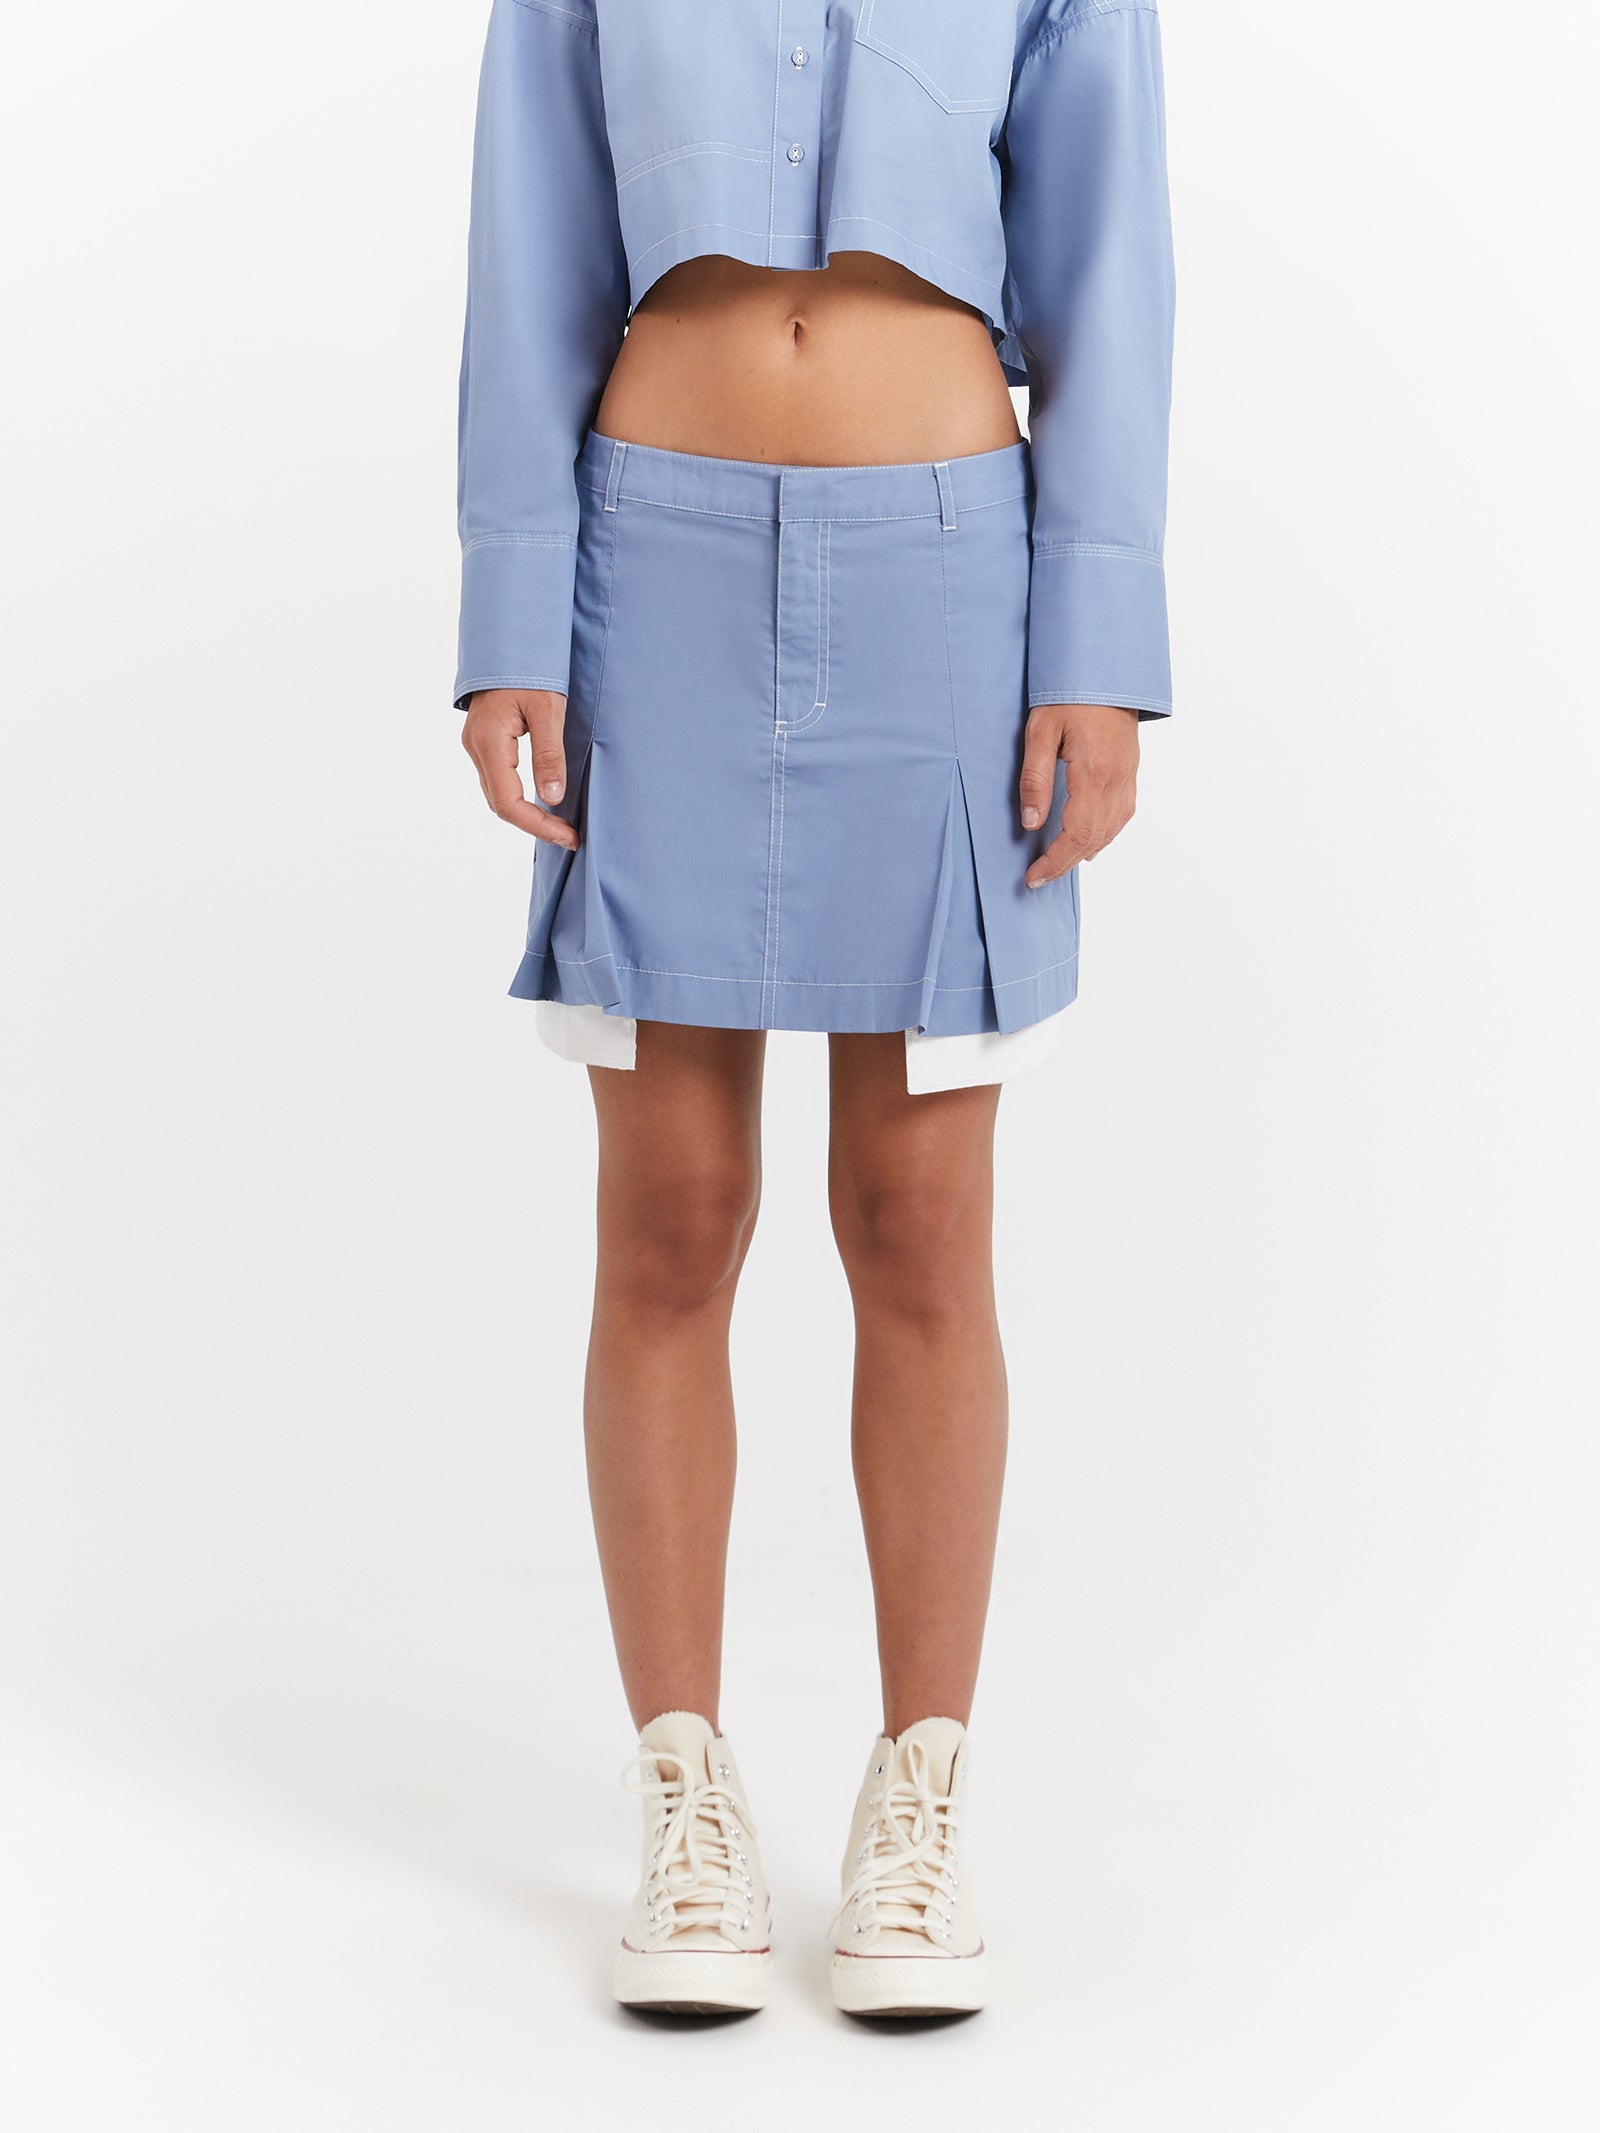 Monica Mini Skirt in Chambray - Glue Store